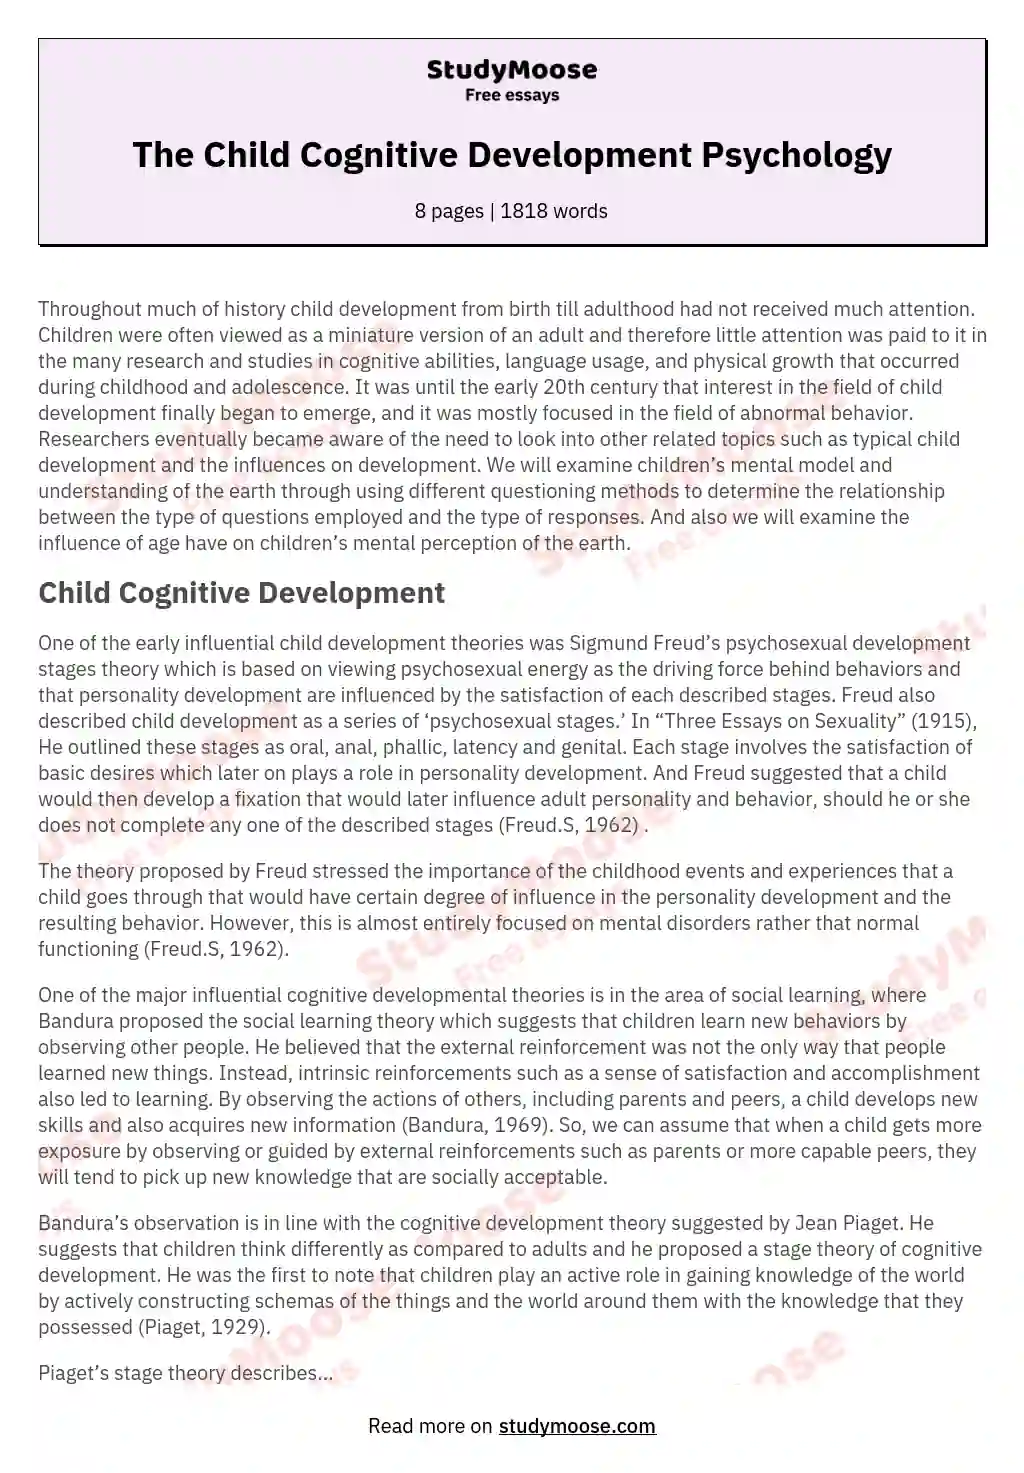 The Child Cognitive Development Psychology